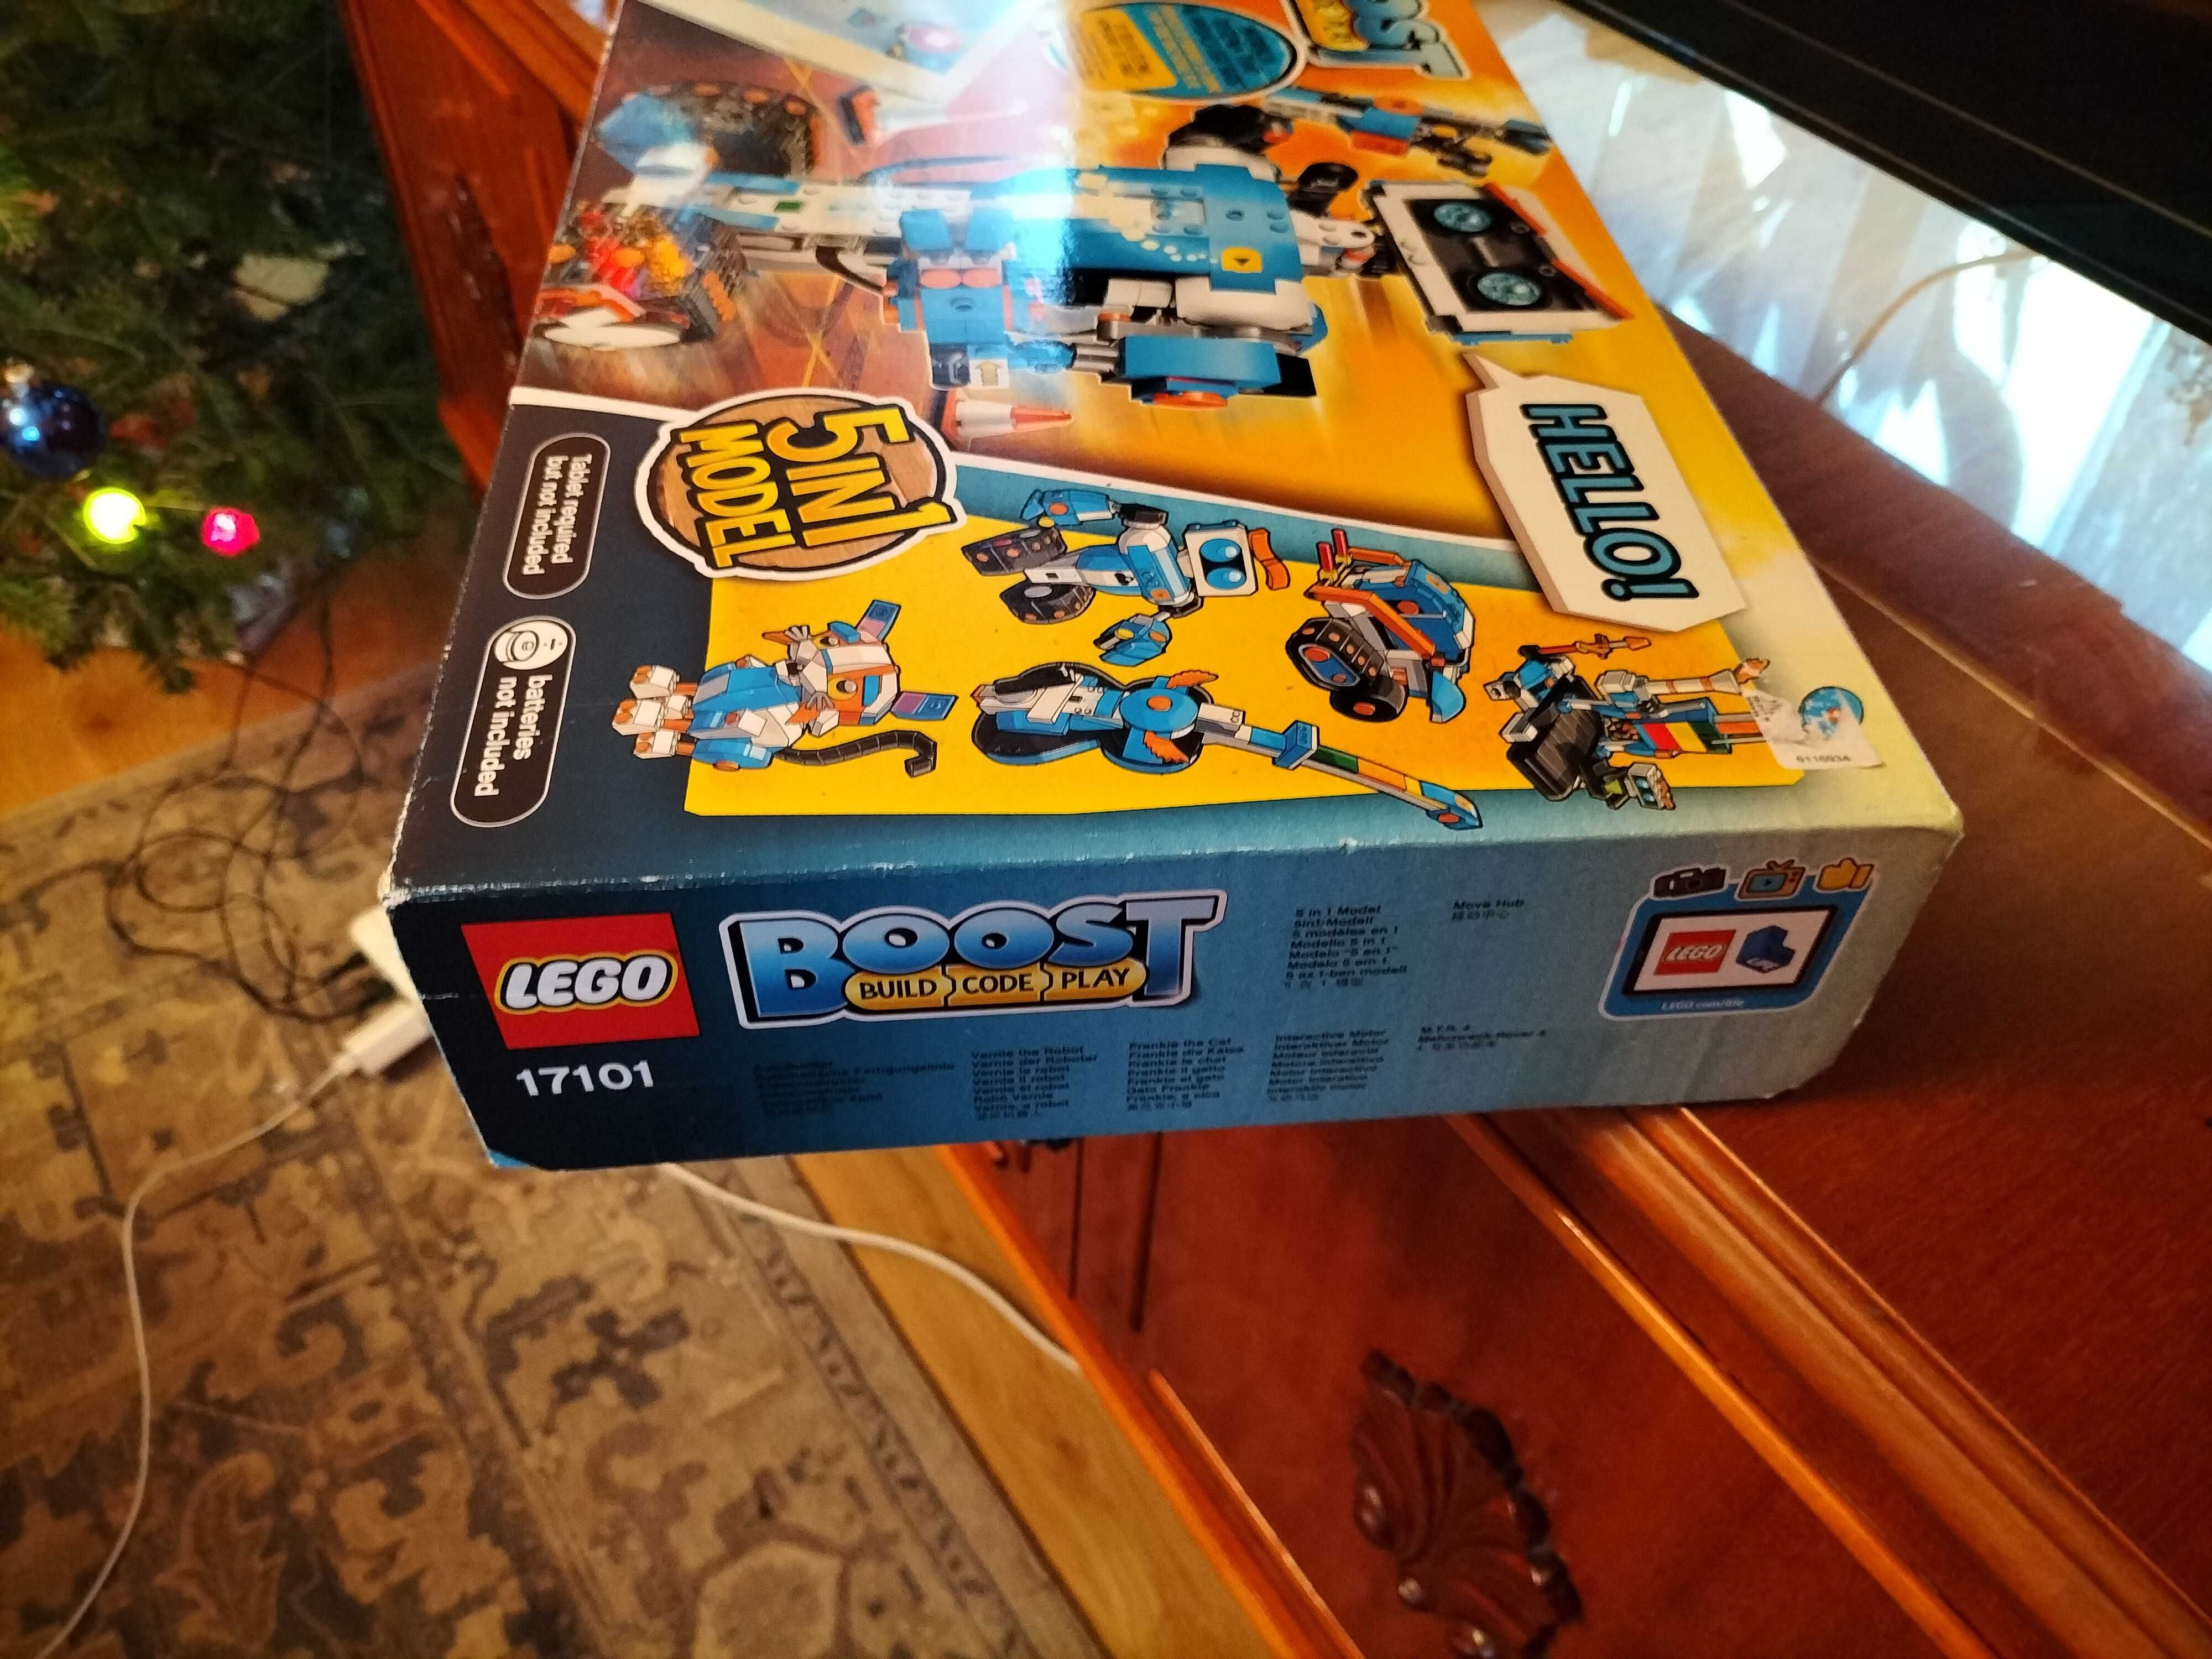 Pudełko od LEGO 17101